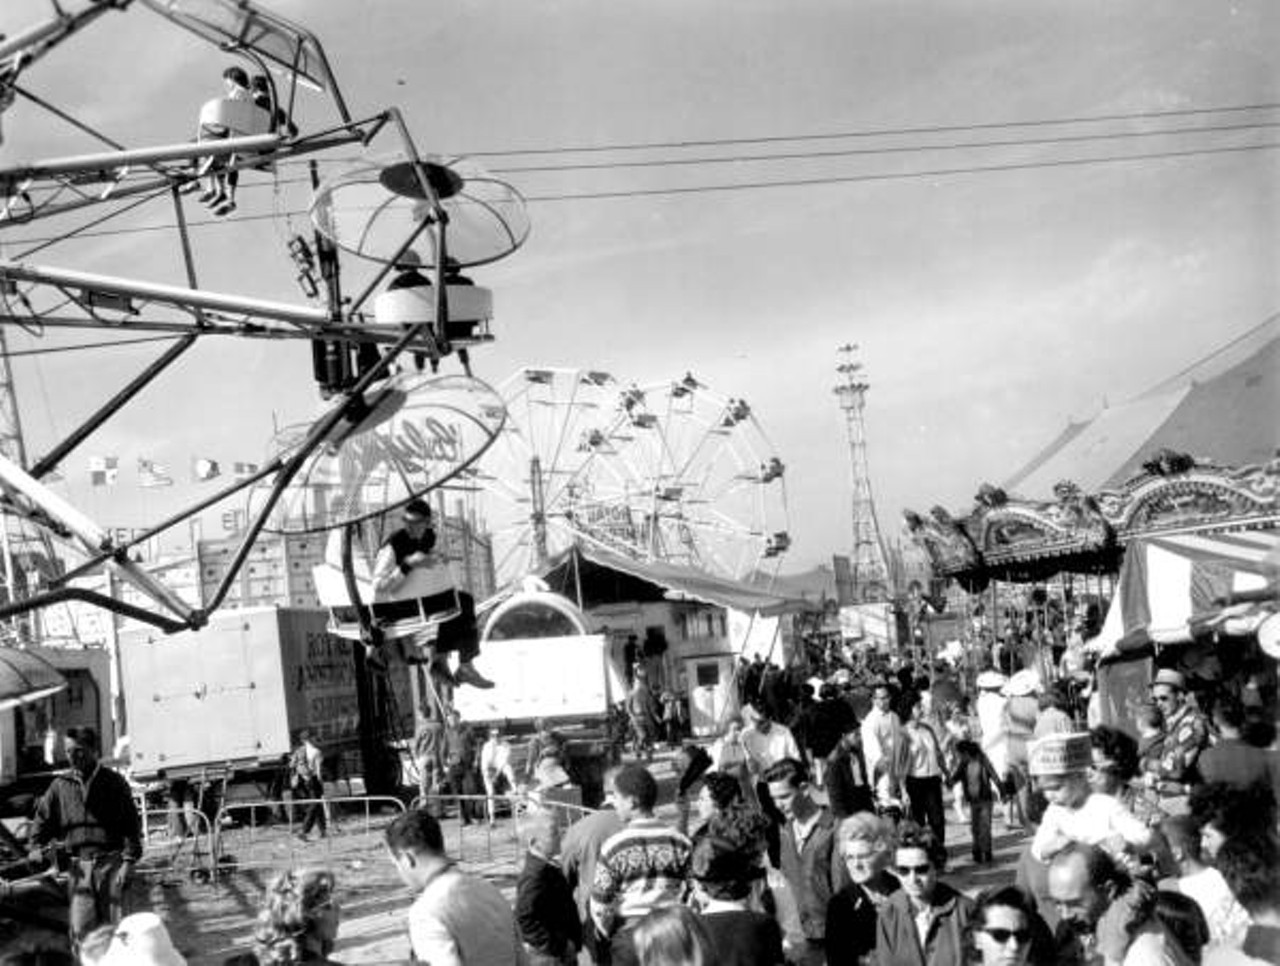 Crowds enjoying the Florida State Fair, 1963